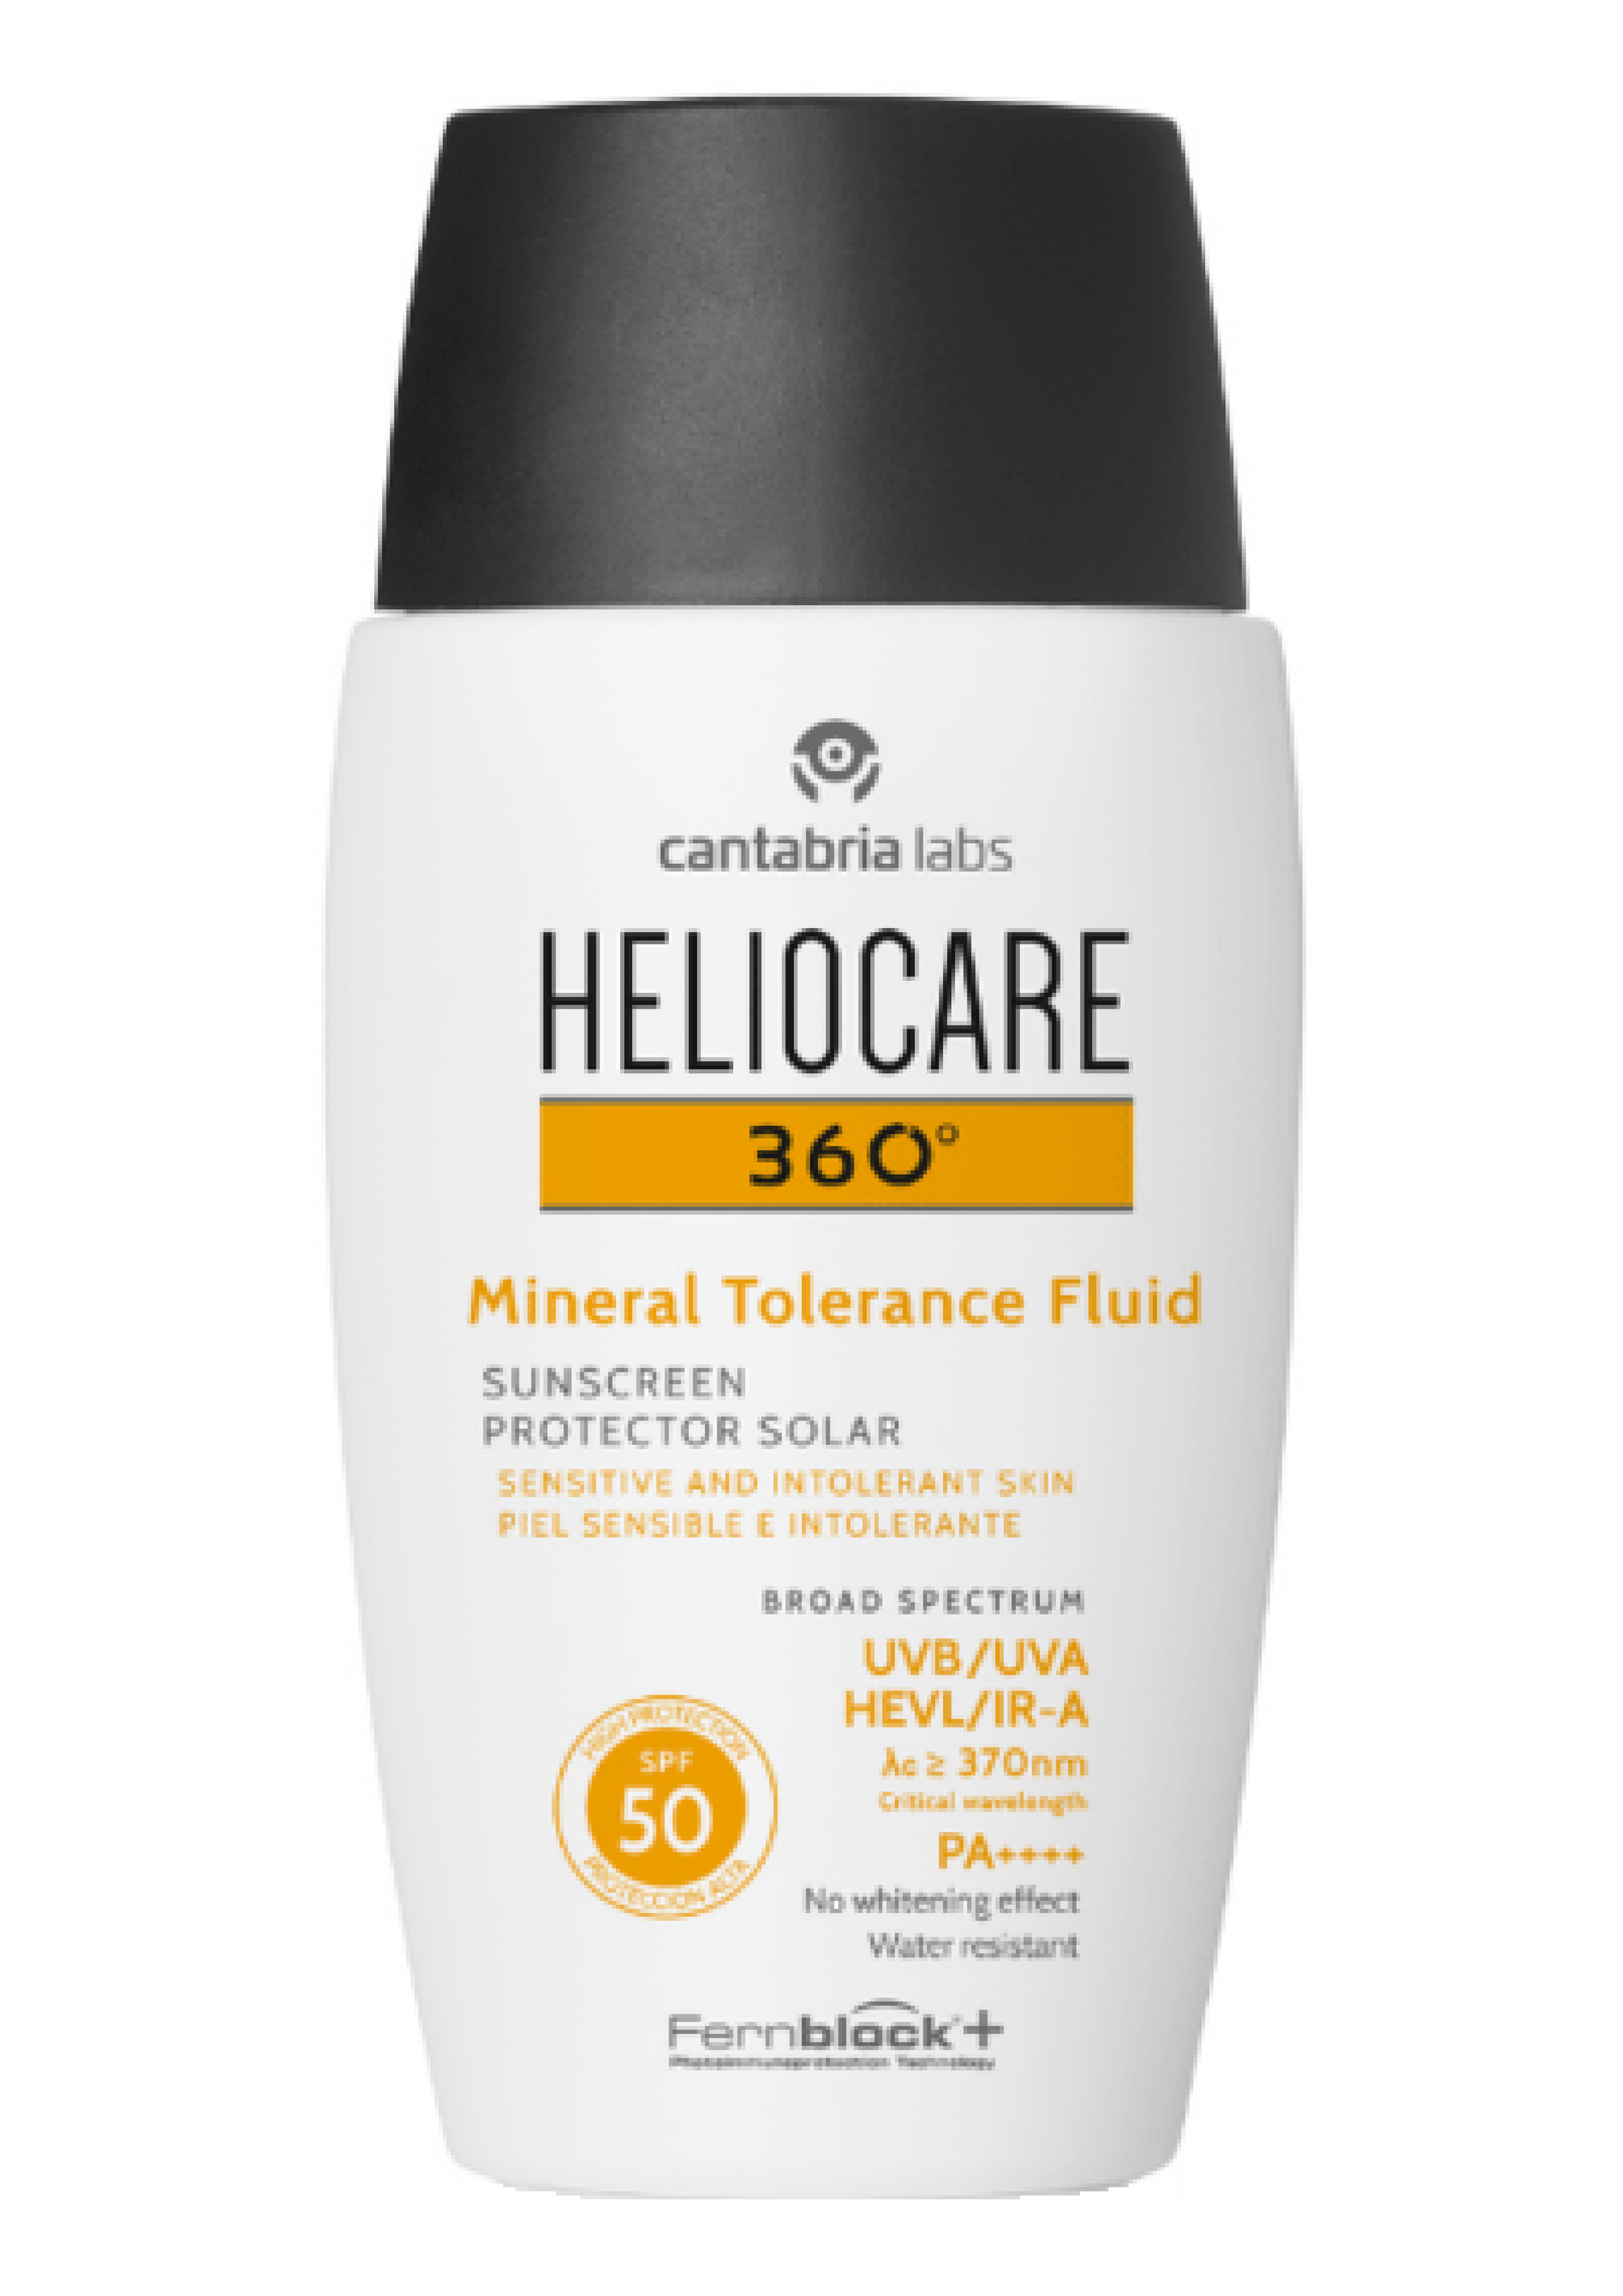 Heliocare® 360º Mineral Tolerance Fluid SPF 50